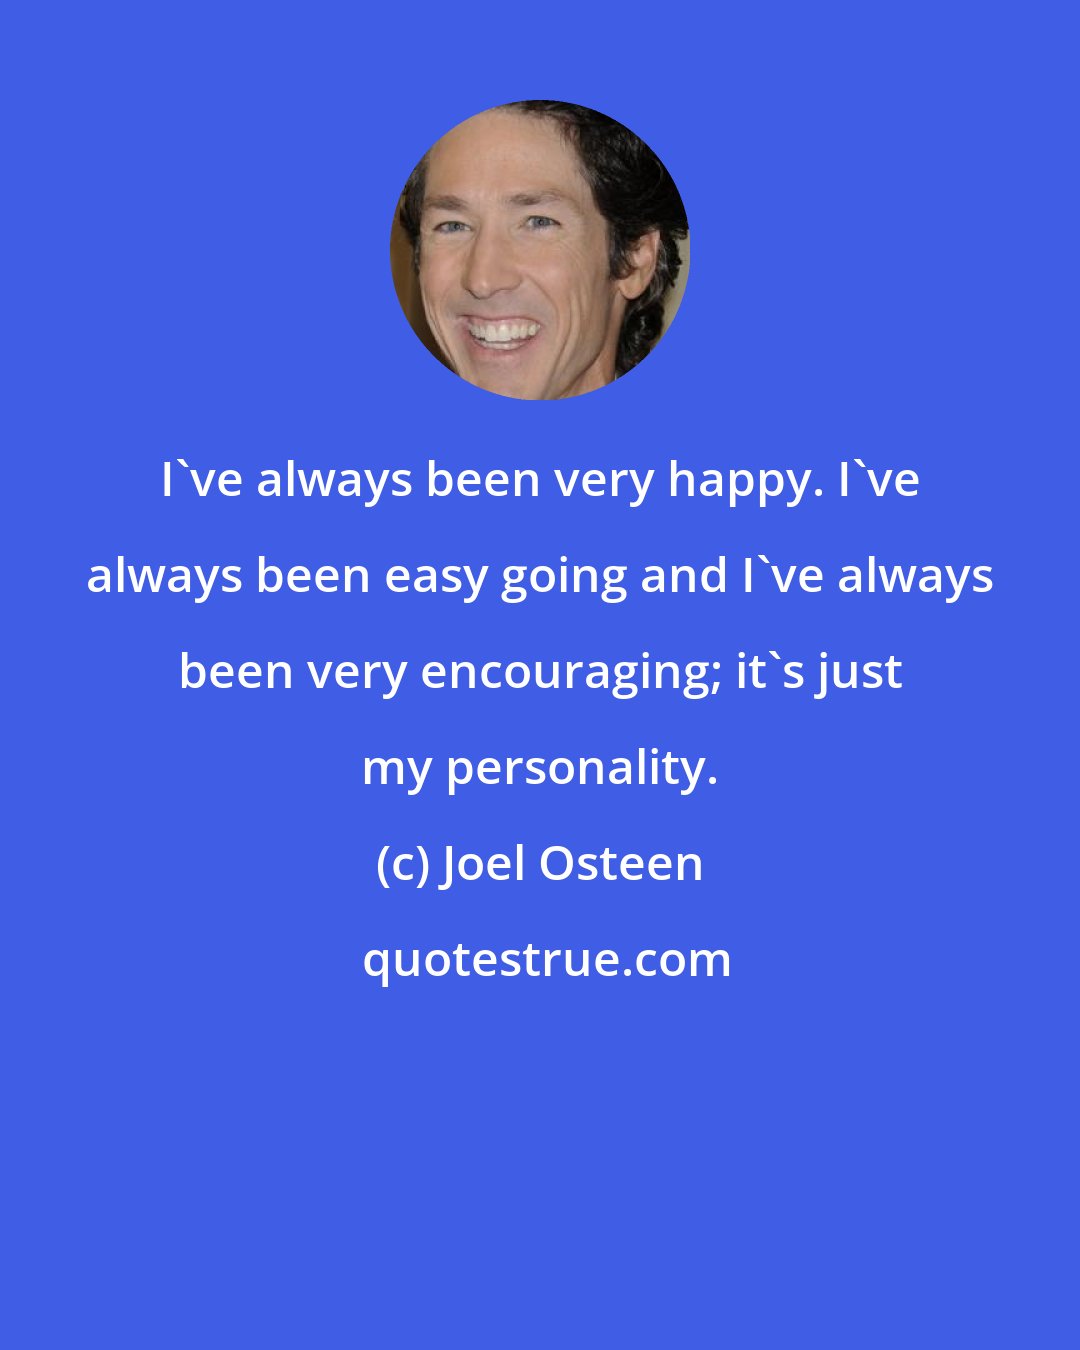 Joel Osteen: I've always been very happy. I've always been easy going and I've always been very encouraging; it's just my personality.